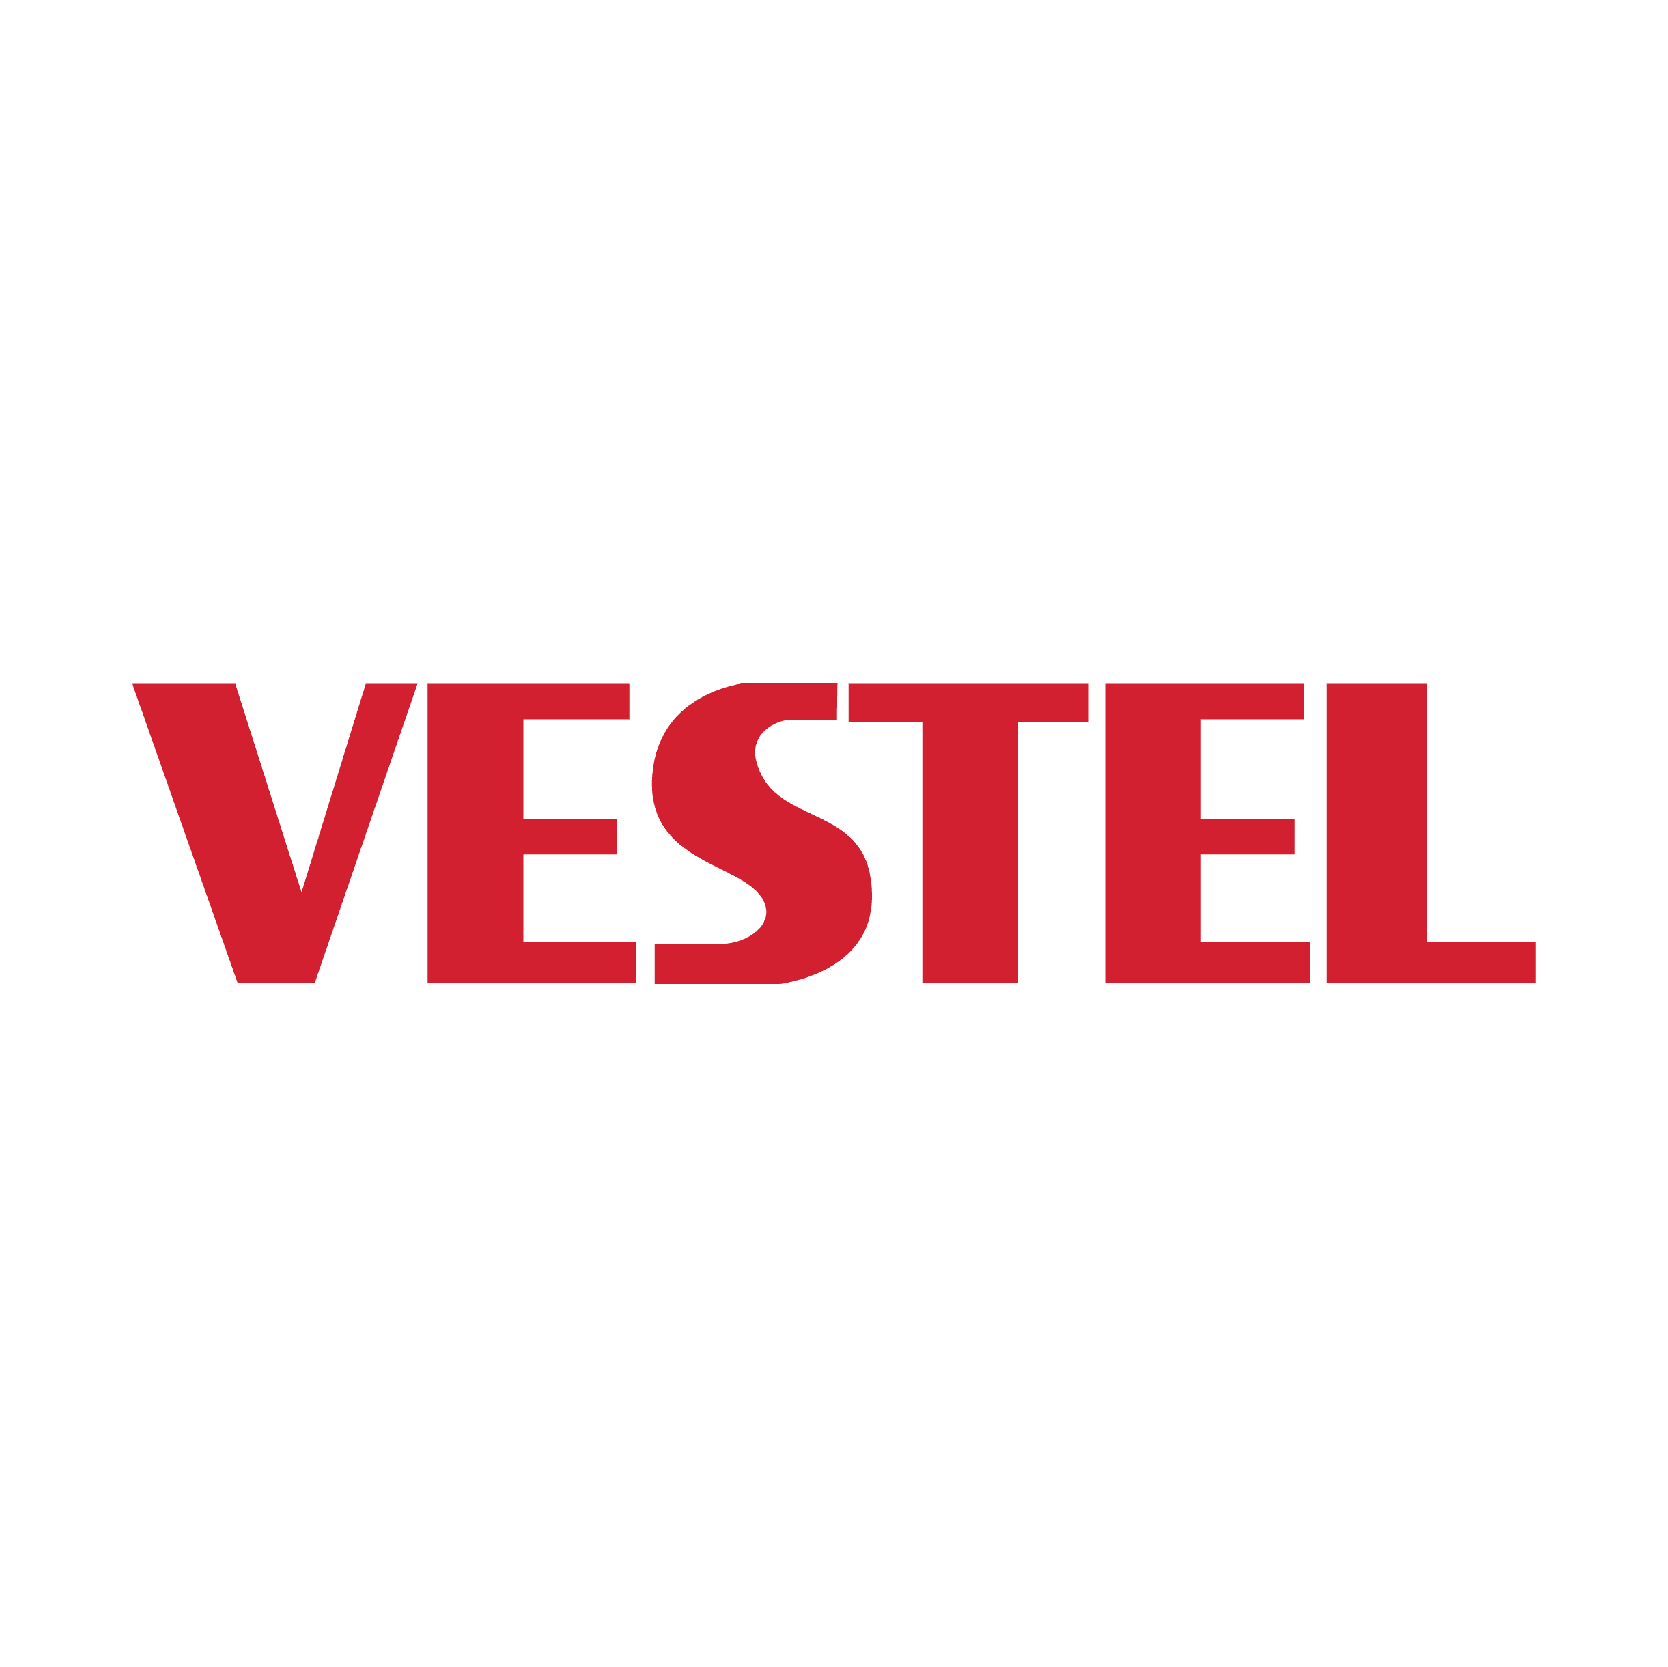 Vestel_Visual_Solutions_Artplace